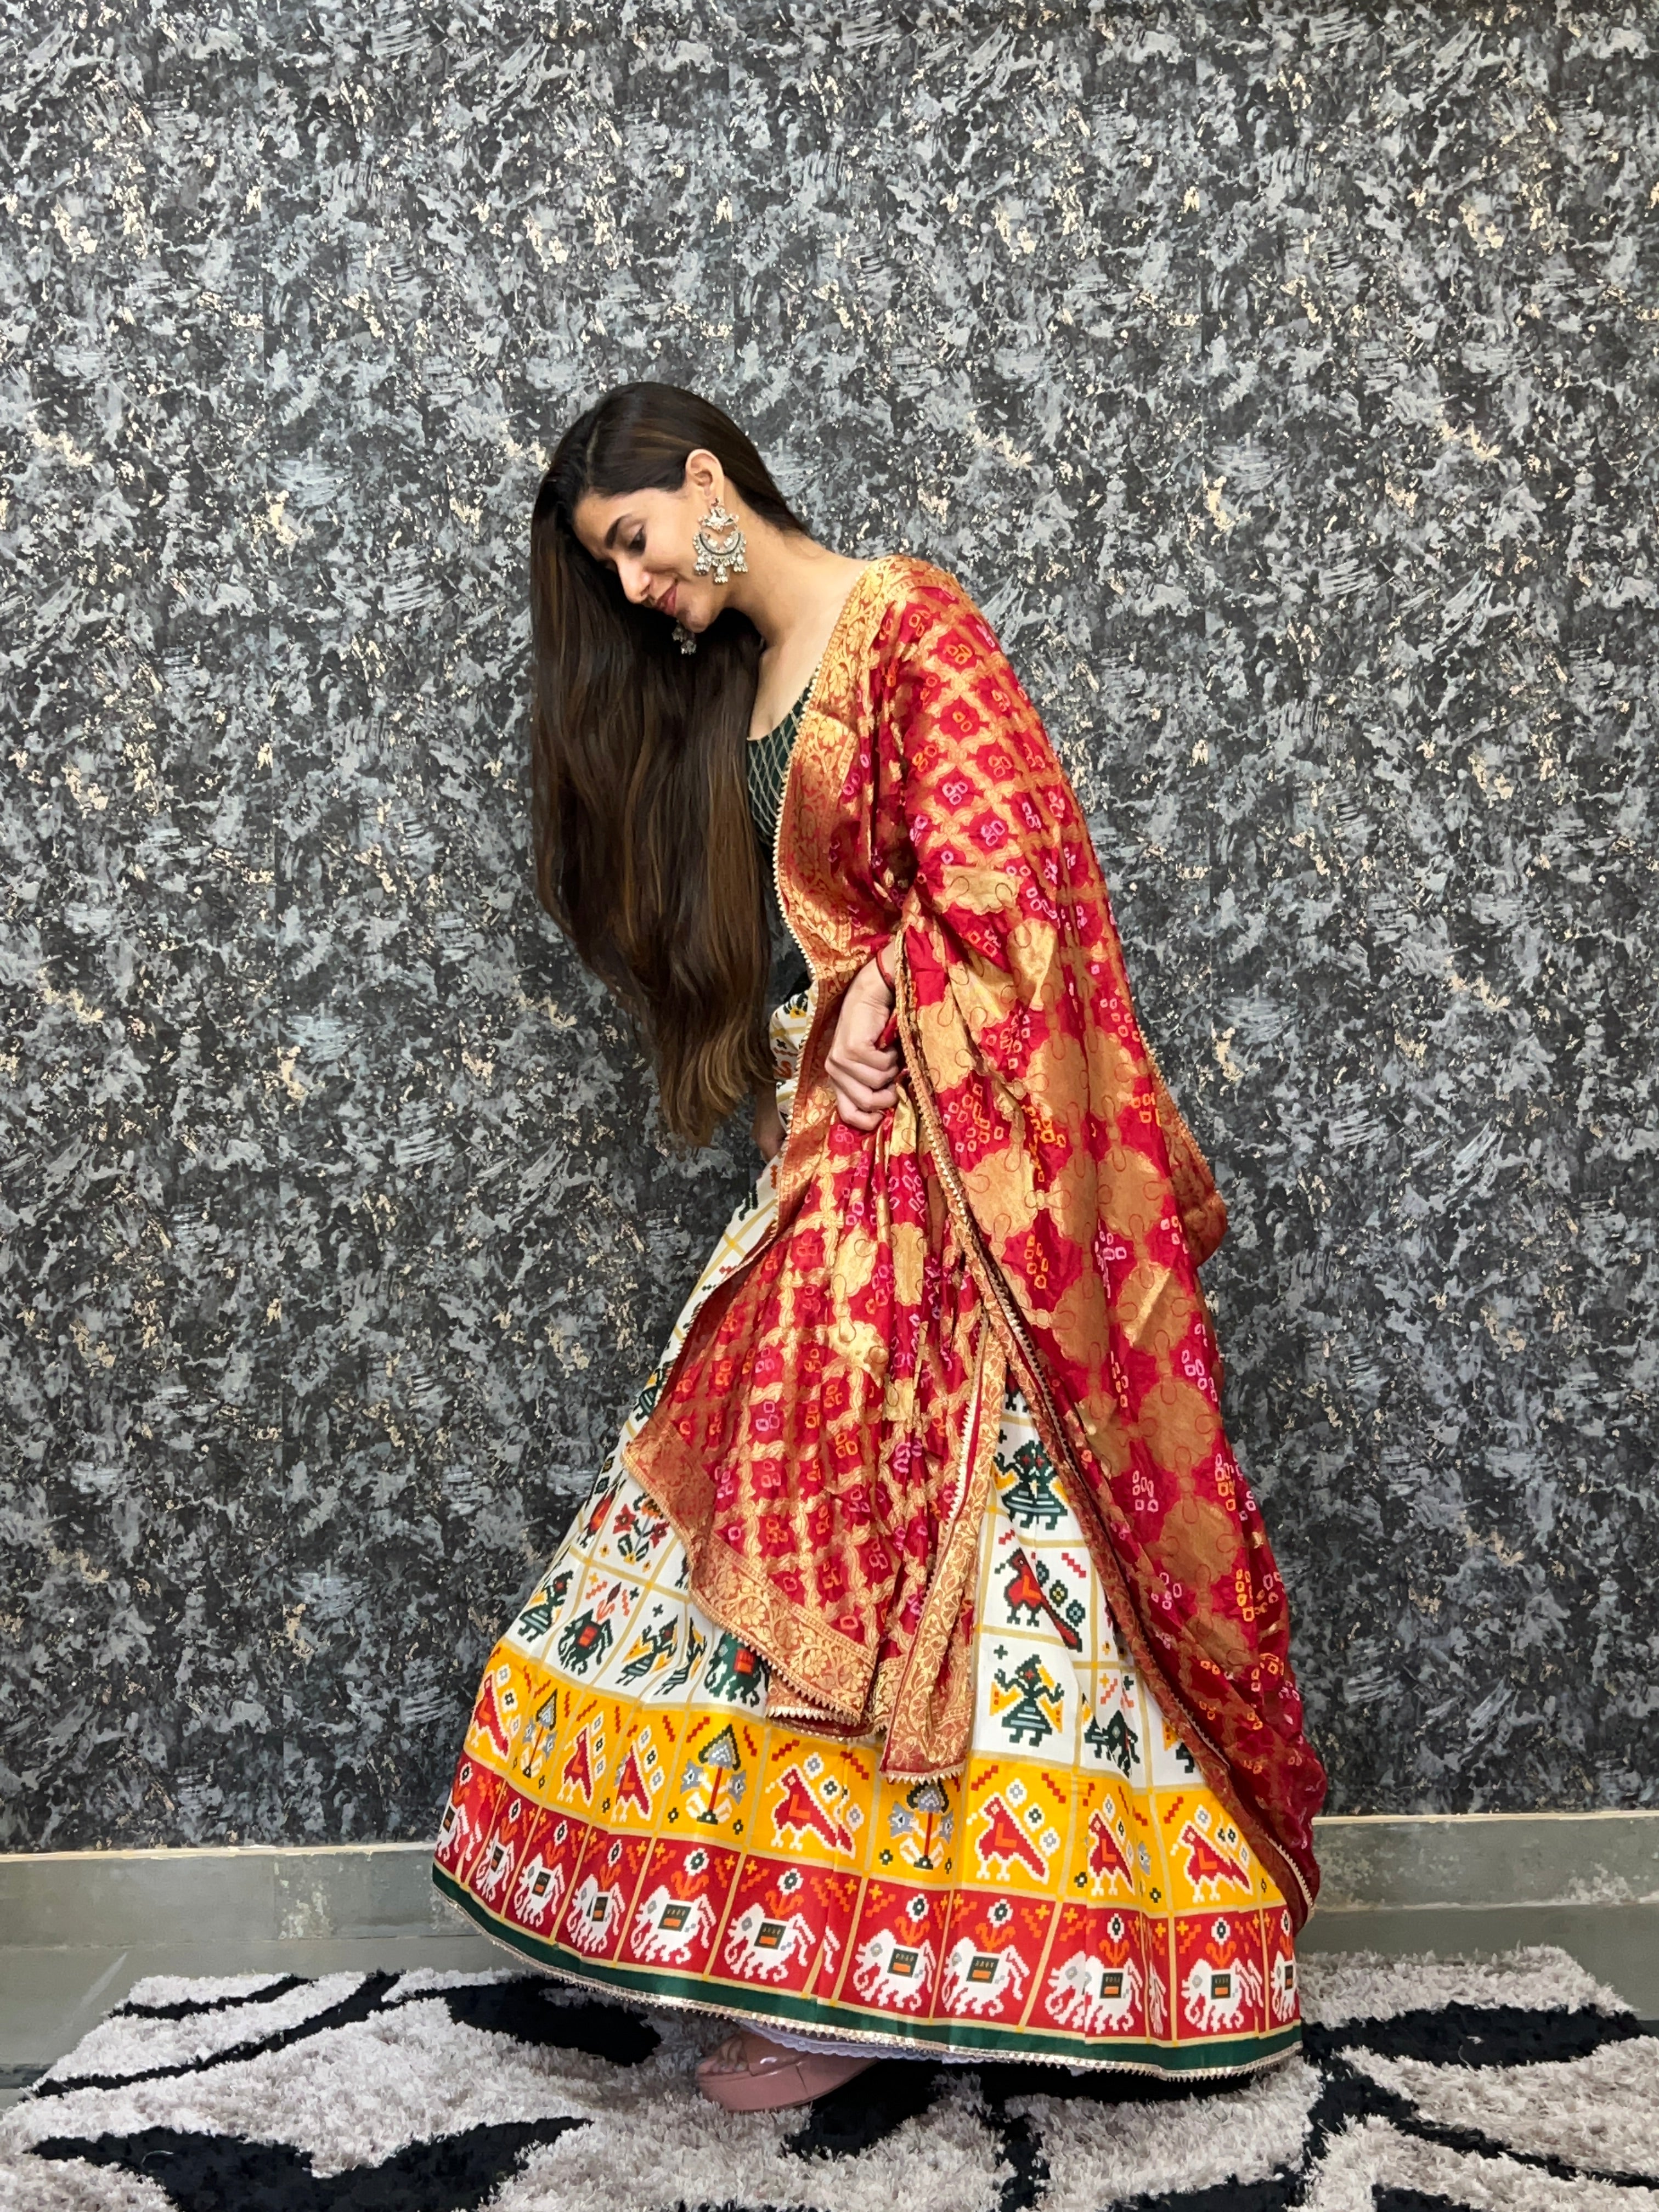 Natural beauty | Lehenga designs simple, Indian fashion, Indian dresses